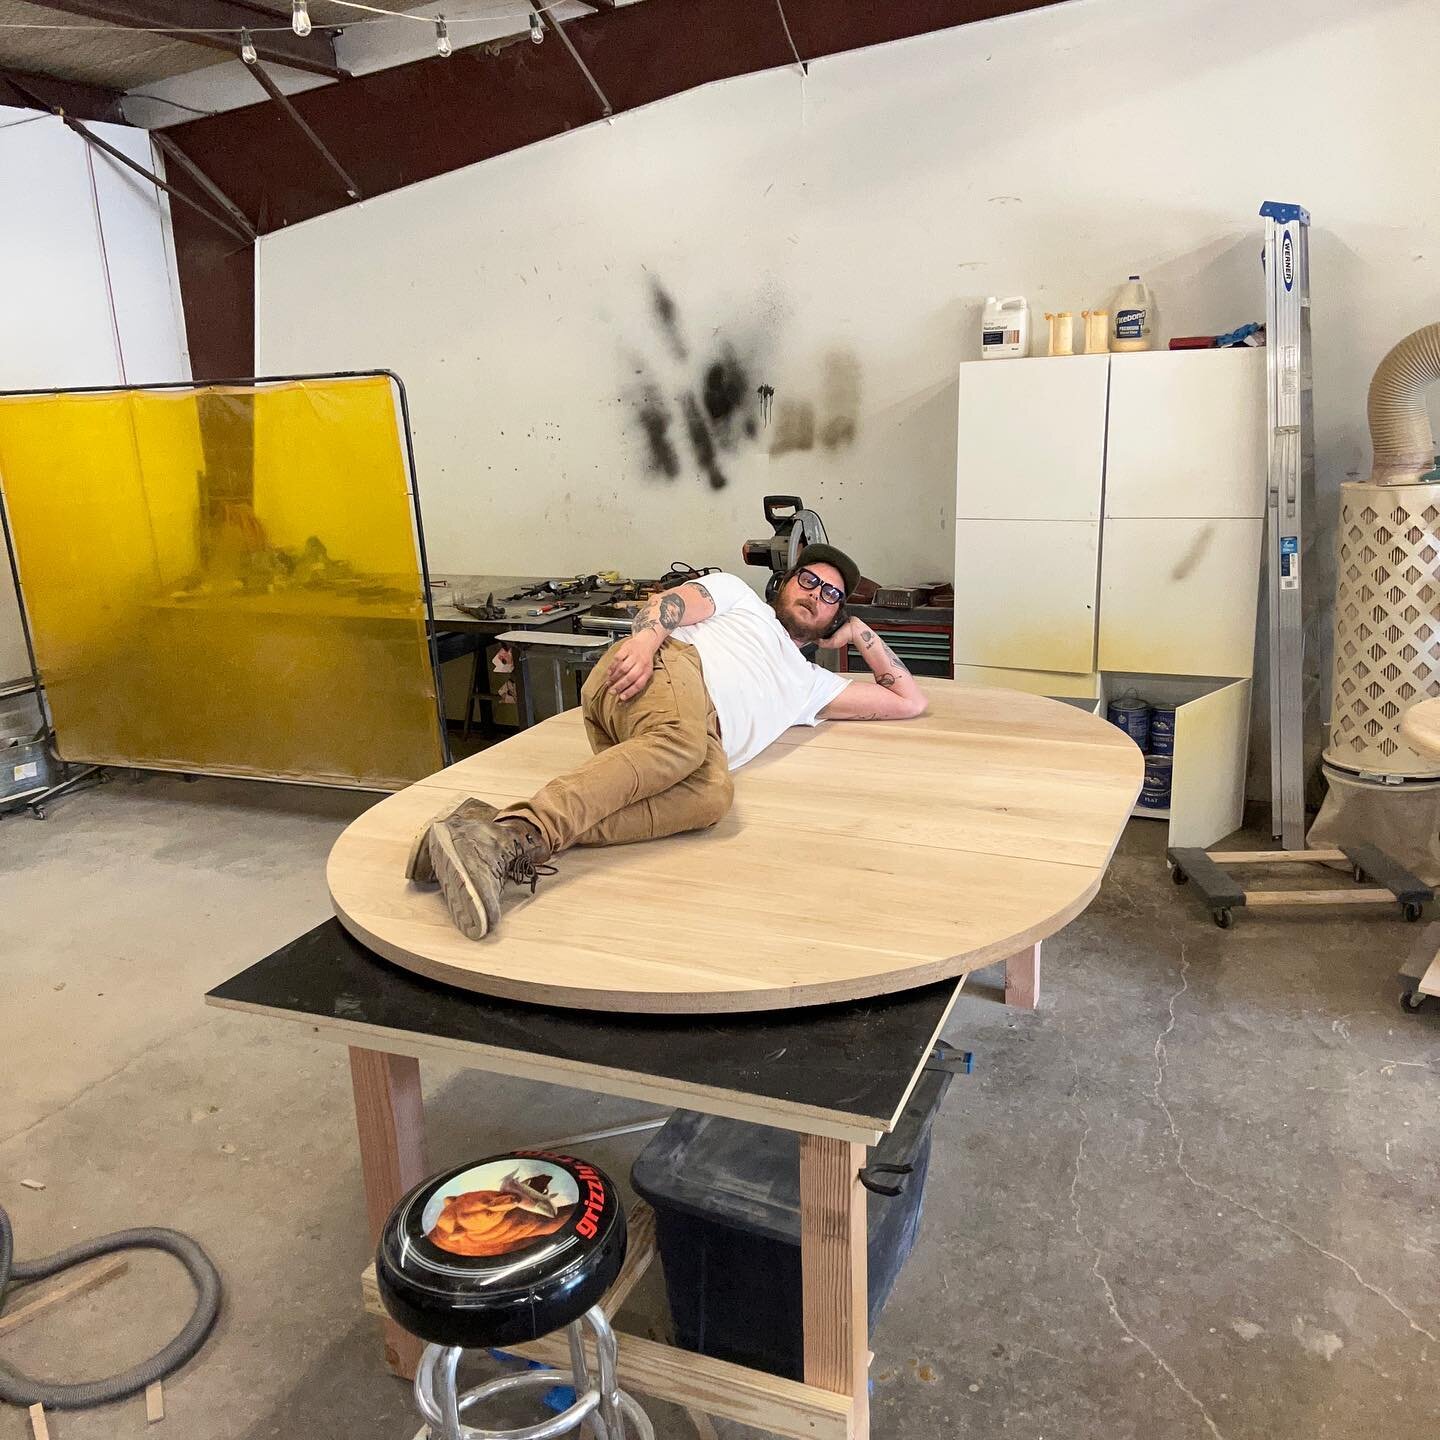 Just a little break between jobs. 
.
.
.
#custom #whiteoak #diningtable #bigass #table #madeinaustin #nosleepclub #psyched #handmade #handcrafted #furniture #furnituremaker #design #getit